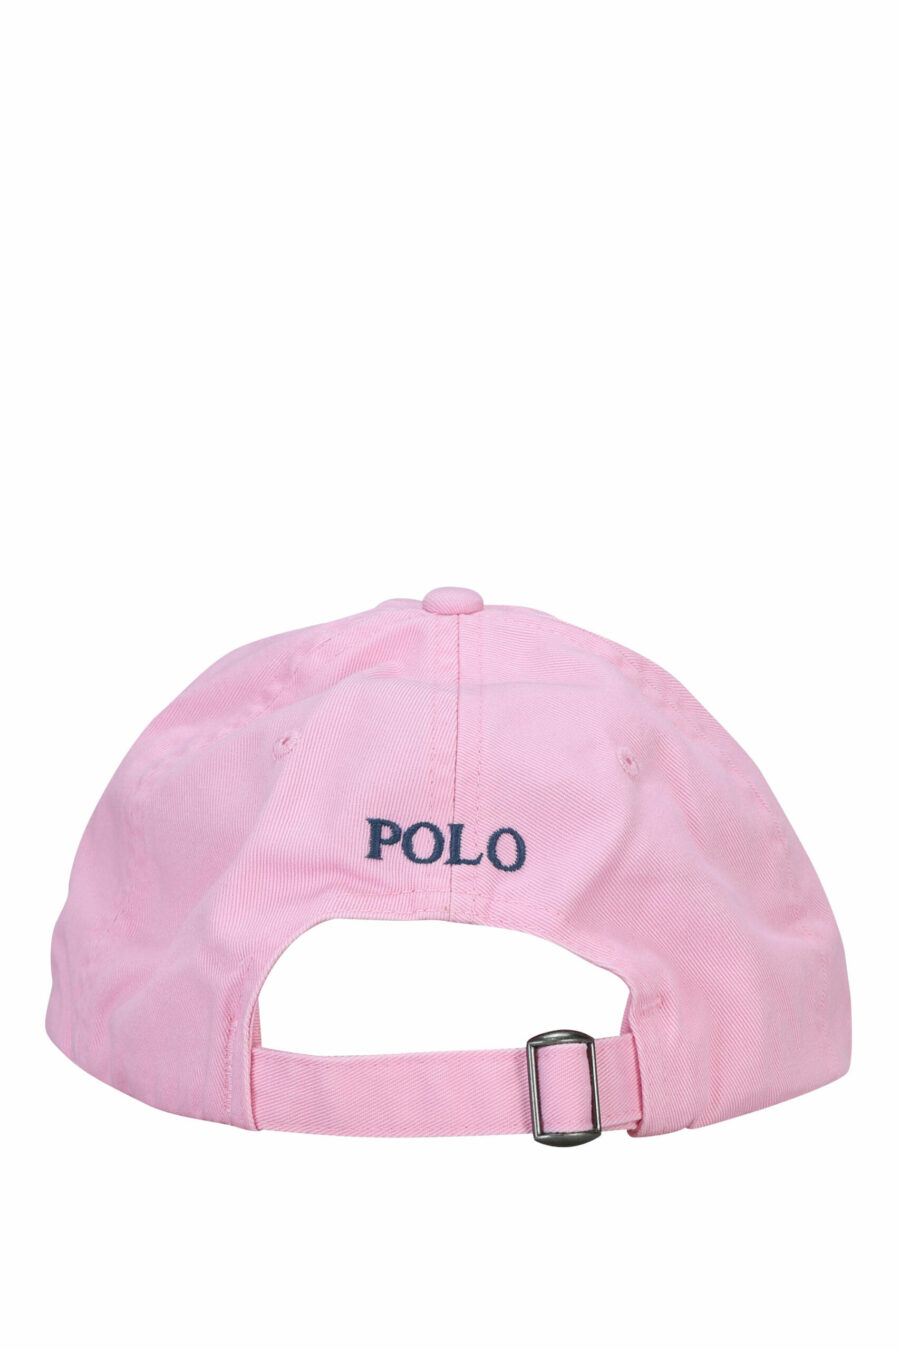 Rosa Mütze mit Mini-Logo "Polo" - 3616411320032 1 skaliert